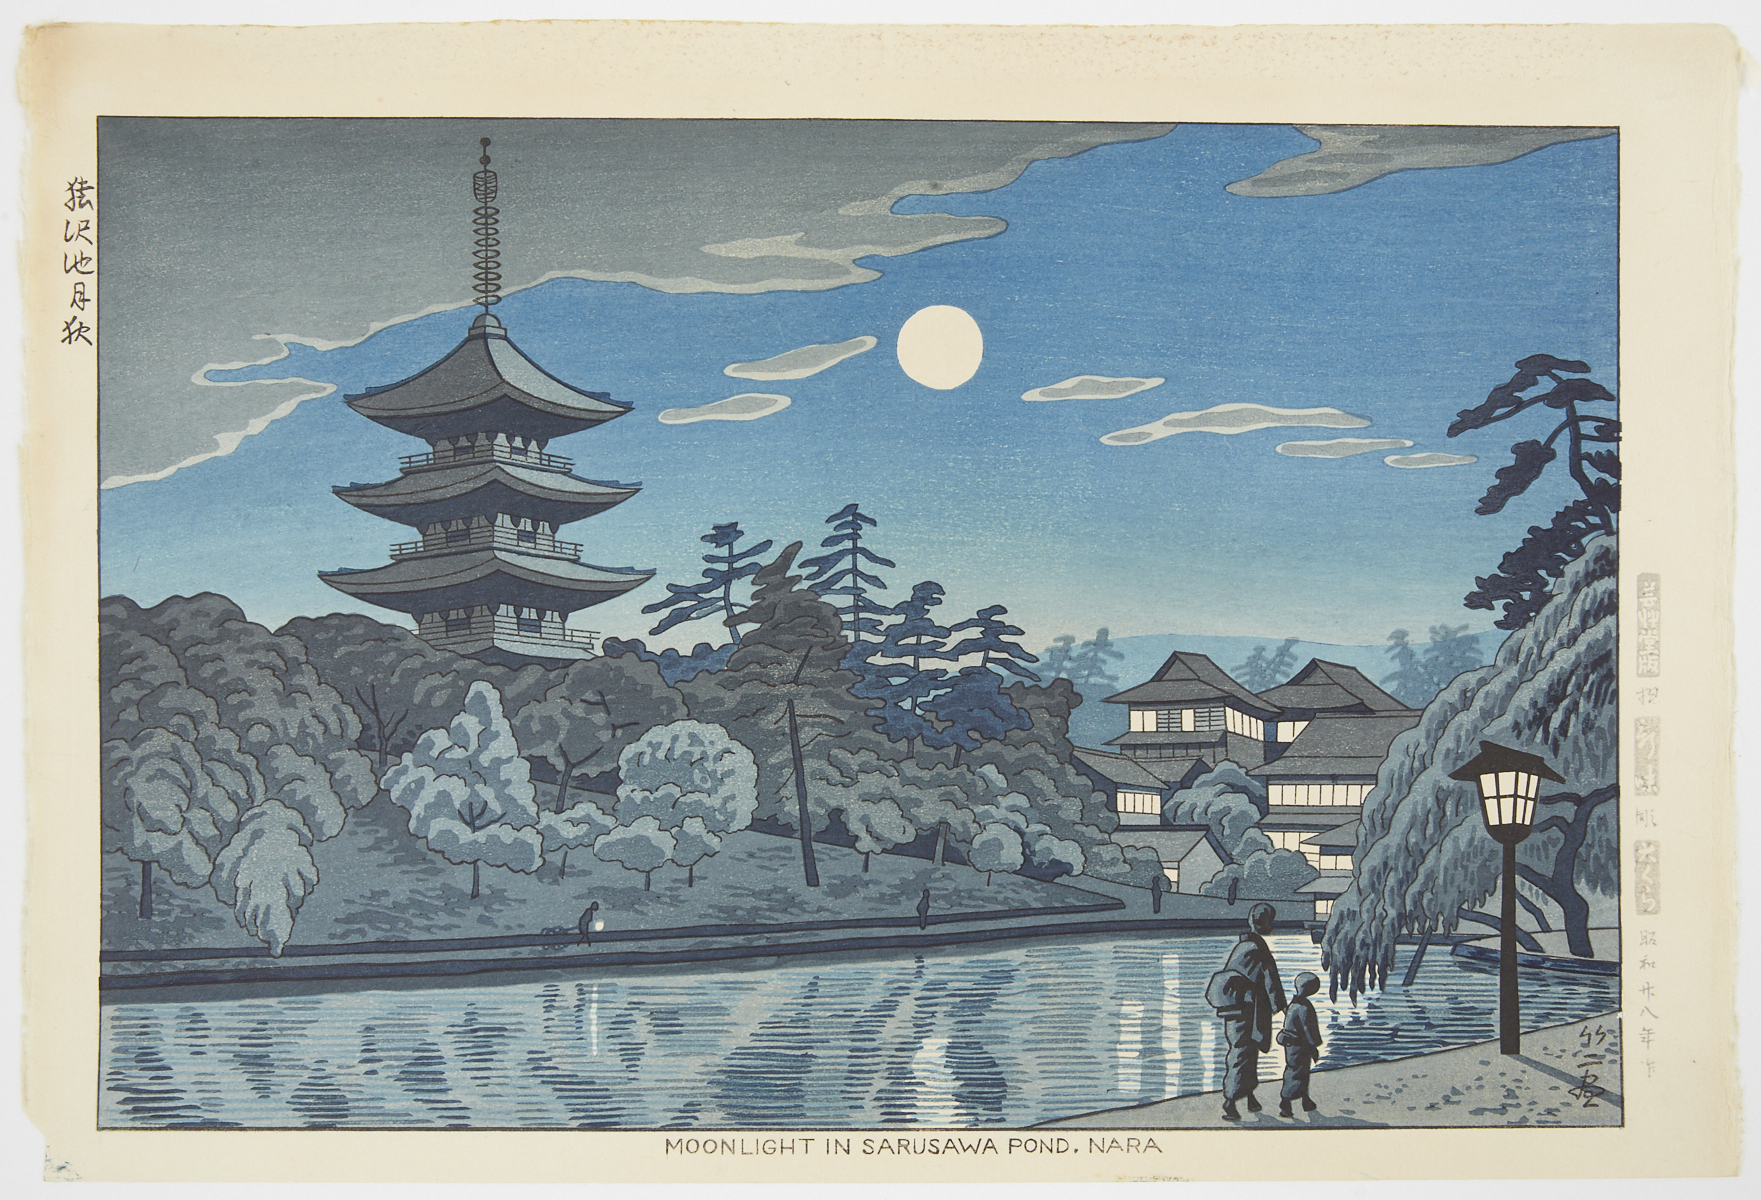 Asano Takeji "Moonlight in Sarasawa Pond Nara" Japanese Woodblock Print - Image 2 of 6